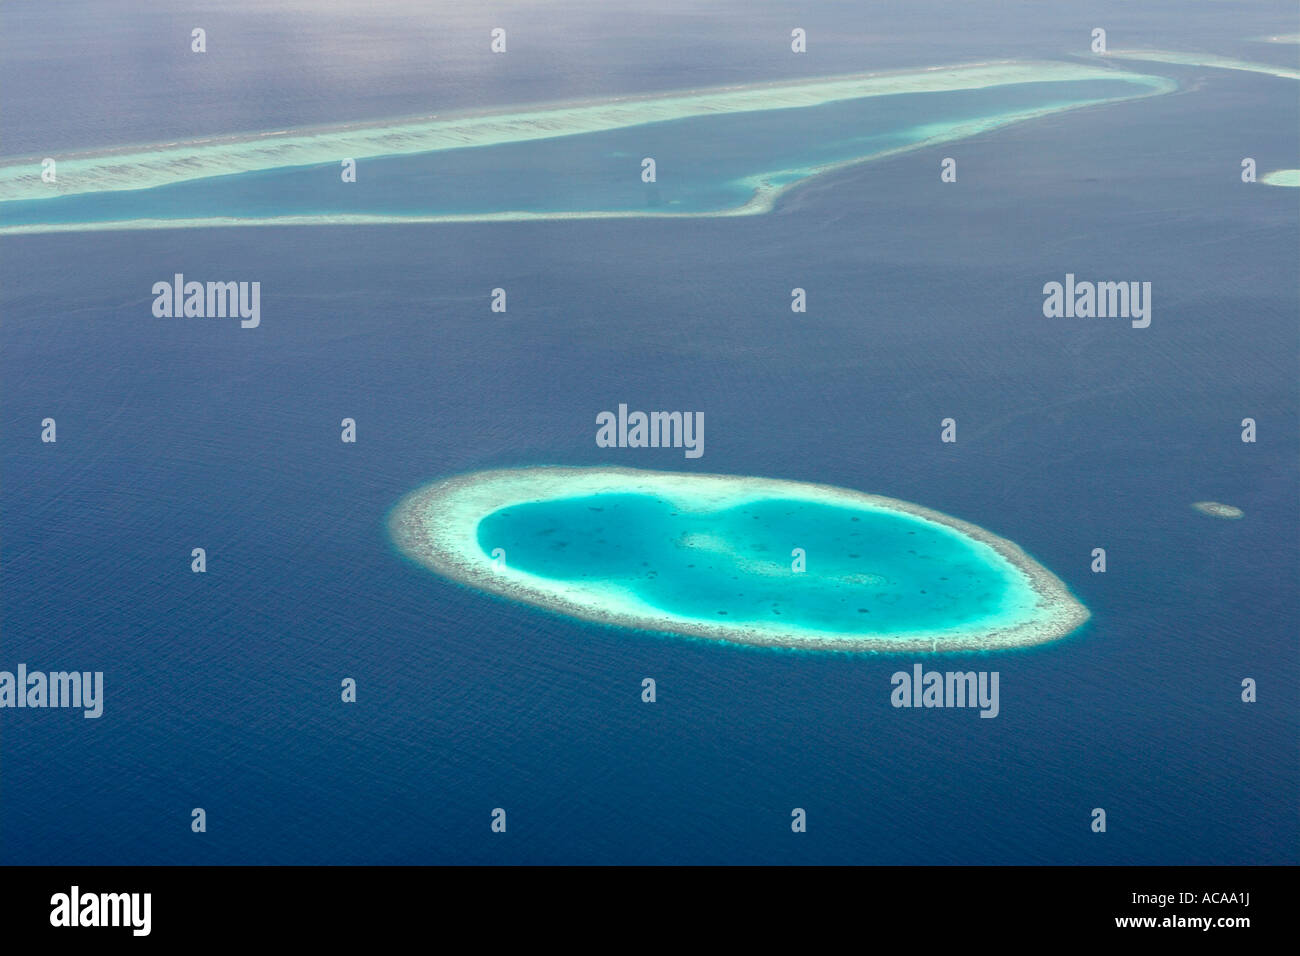 Atolls of the Maldives Stock Photo